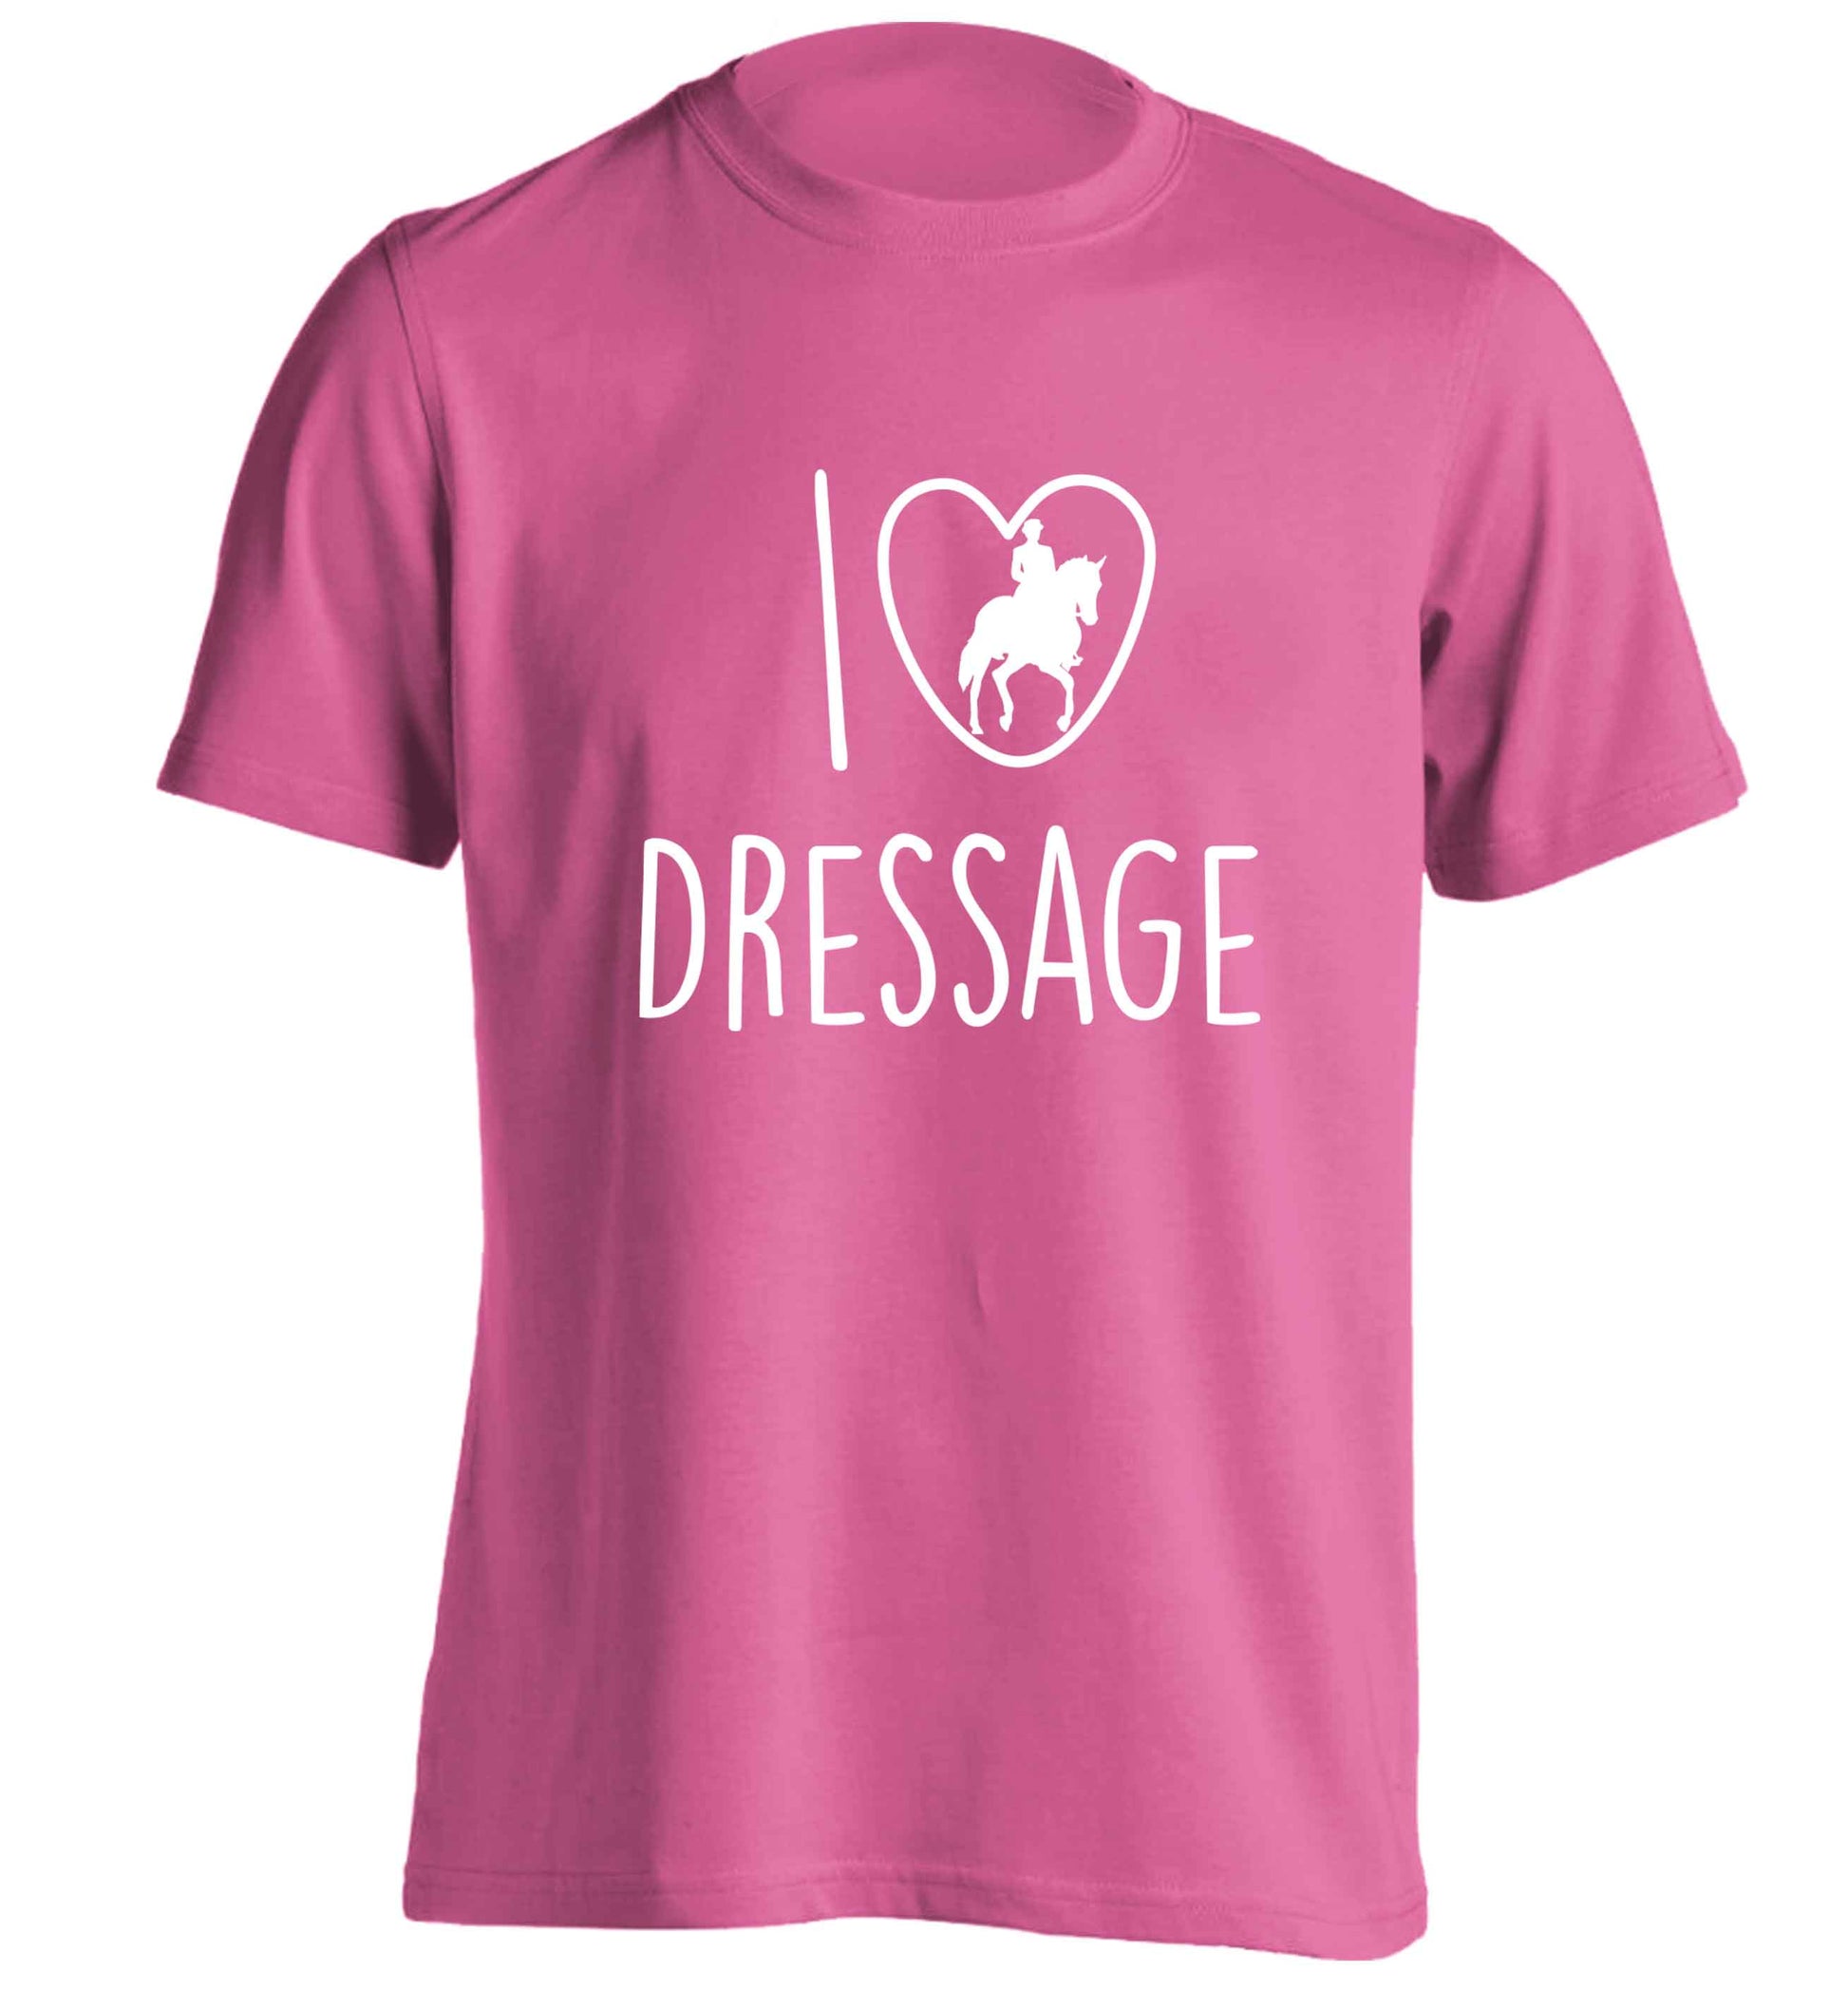 I love dressage adults unisex pink Tshirt 2XL